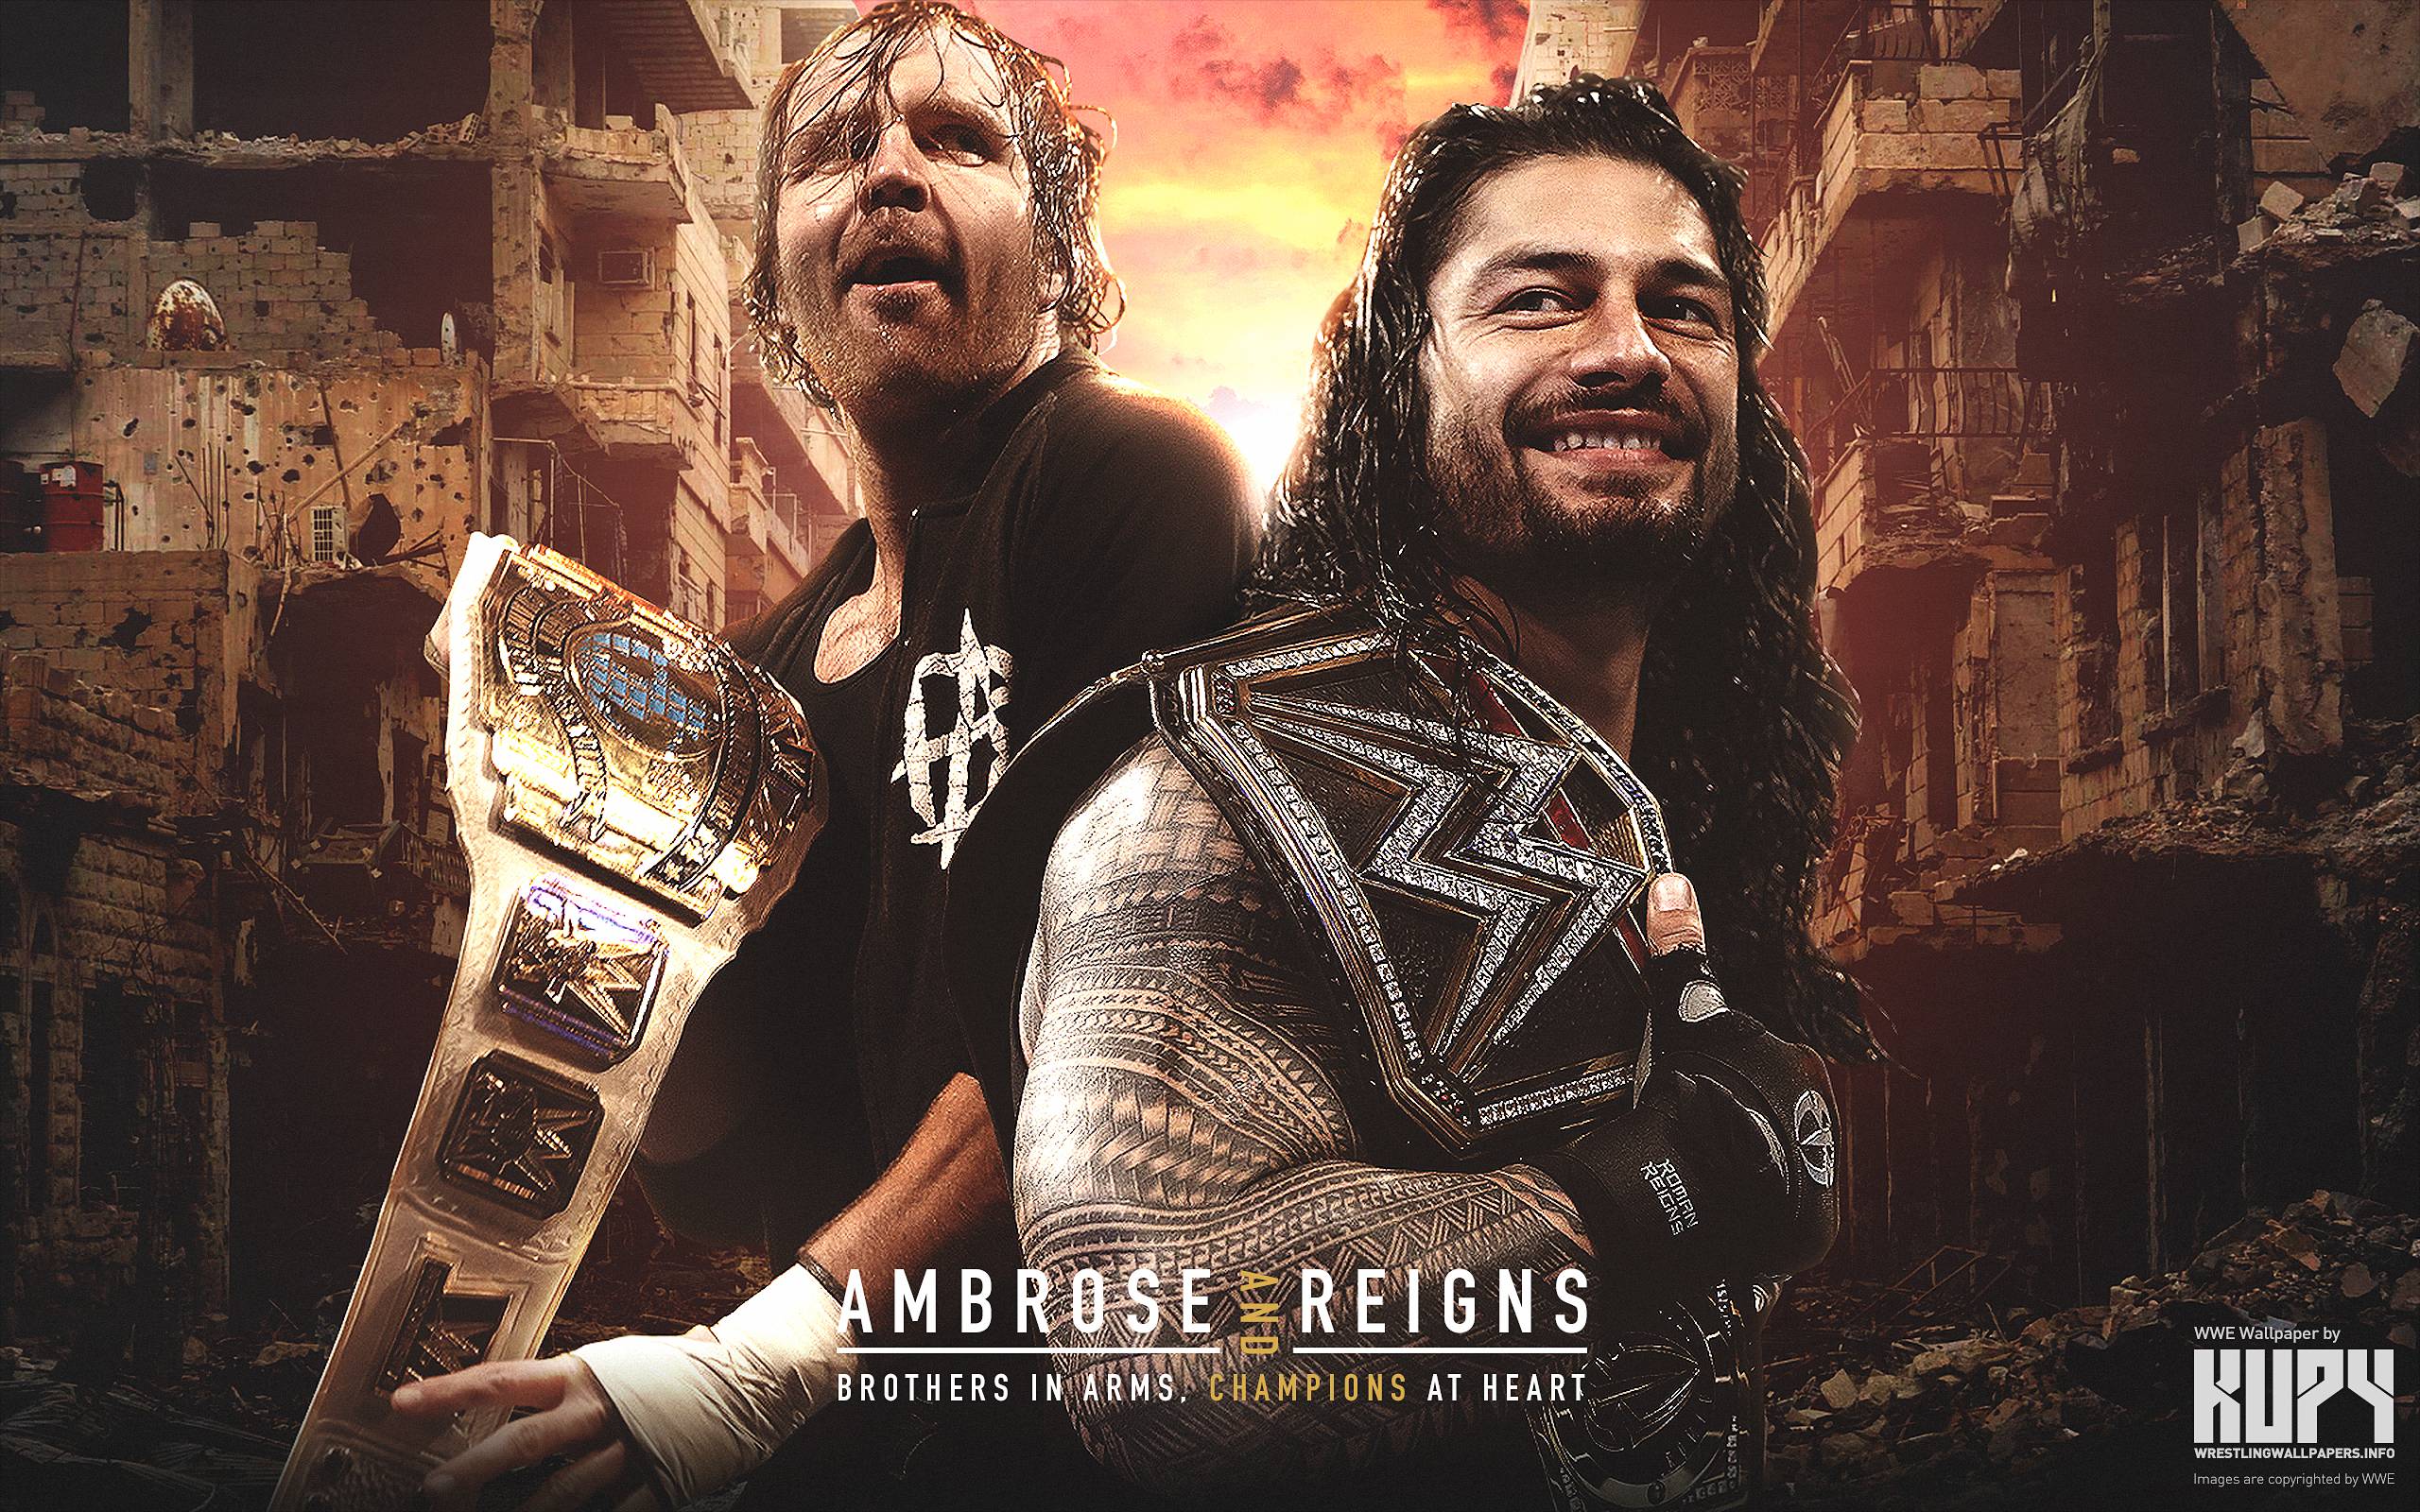 NEW Dean Ambrose & Roman Reigns Champions wallpaper!